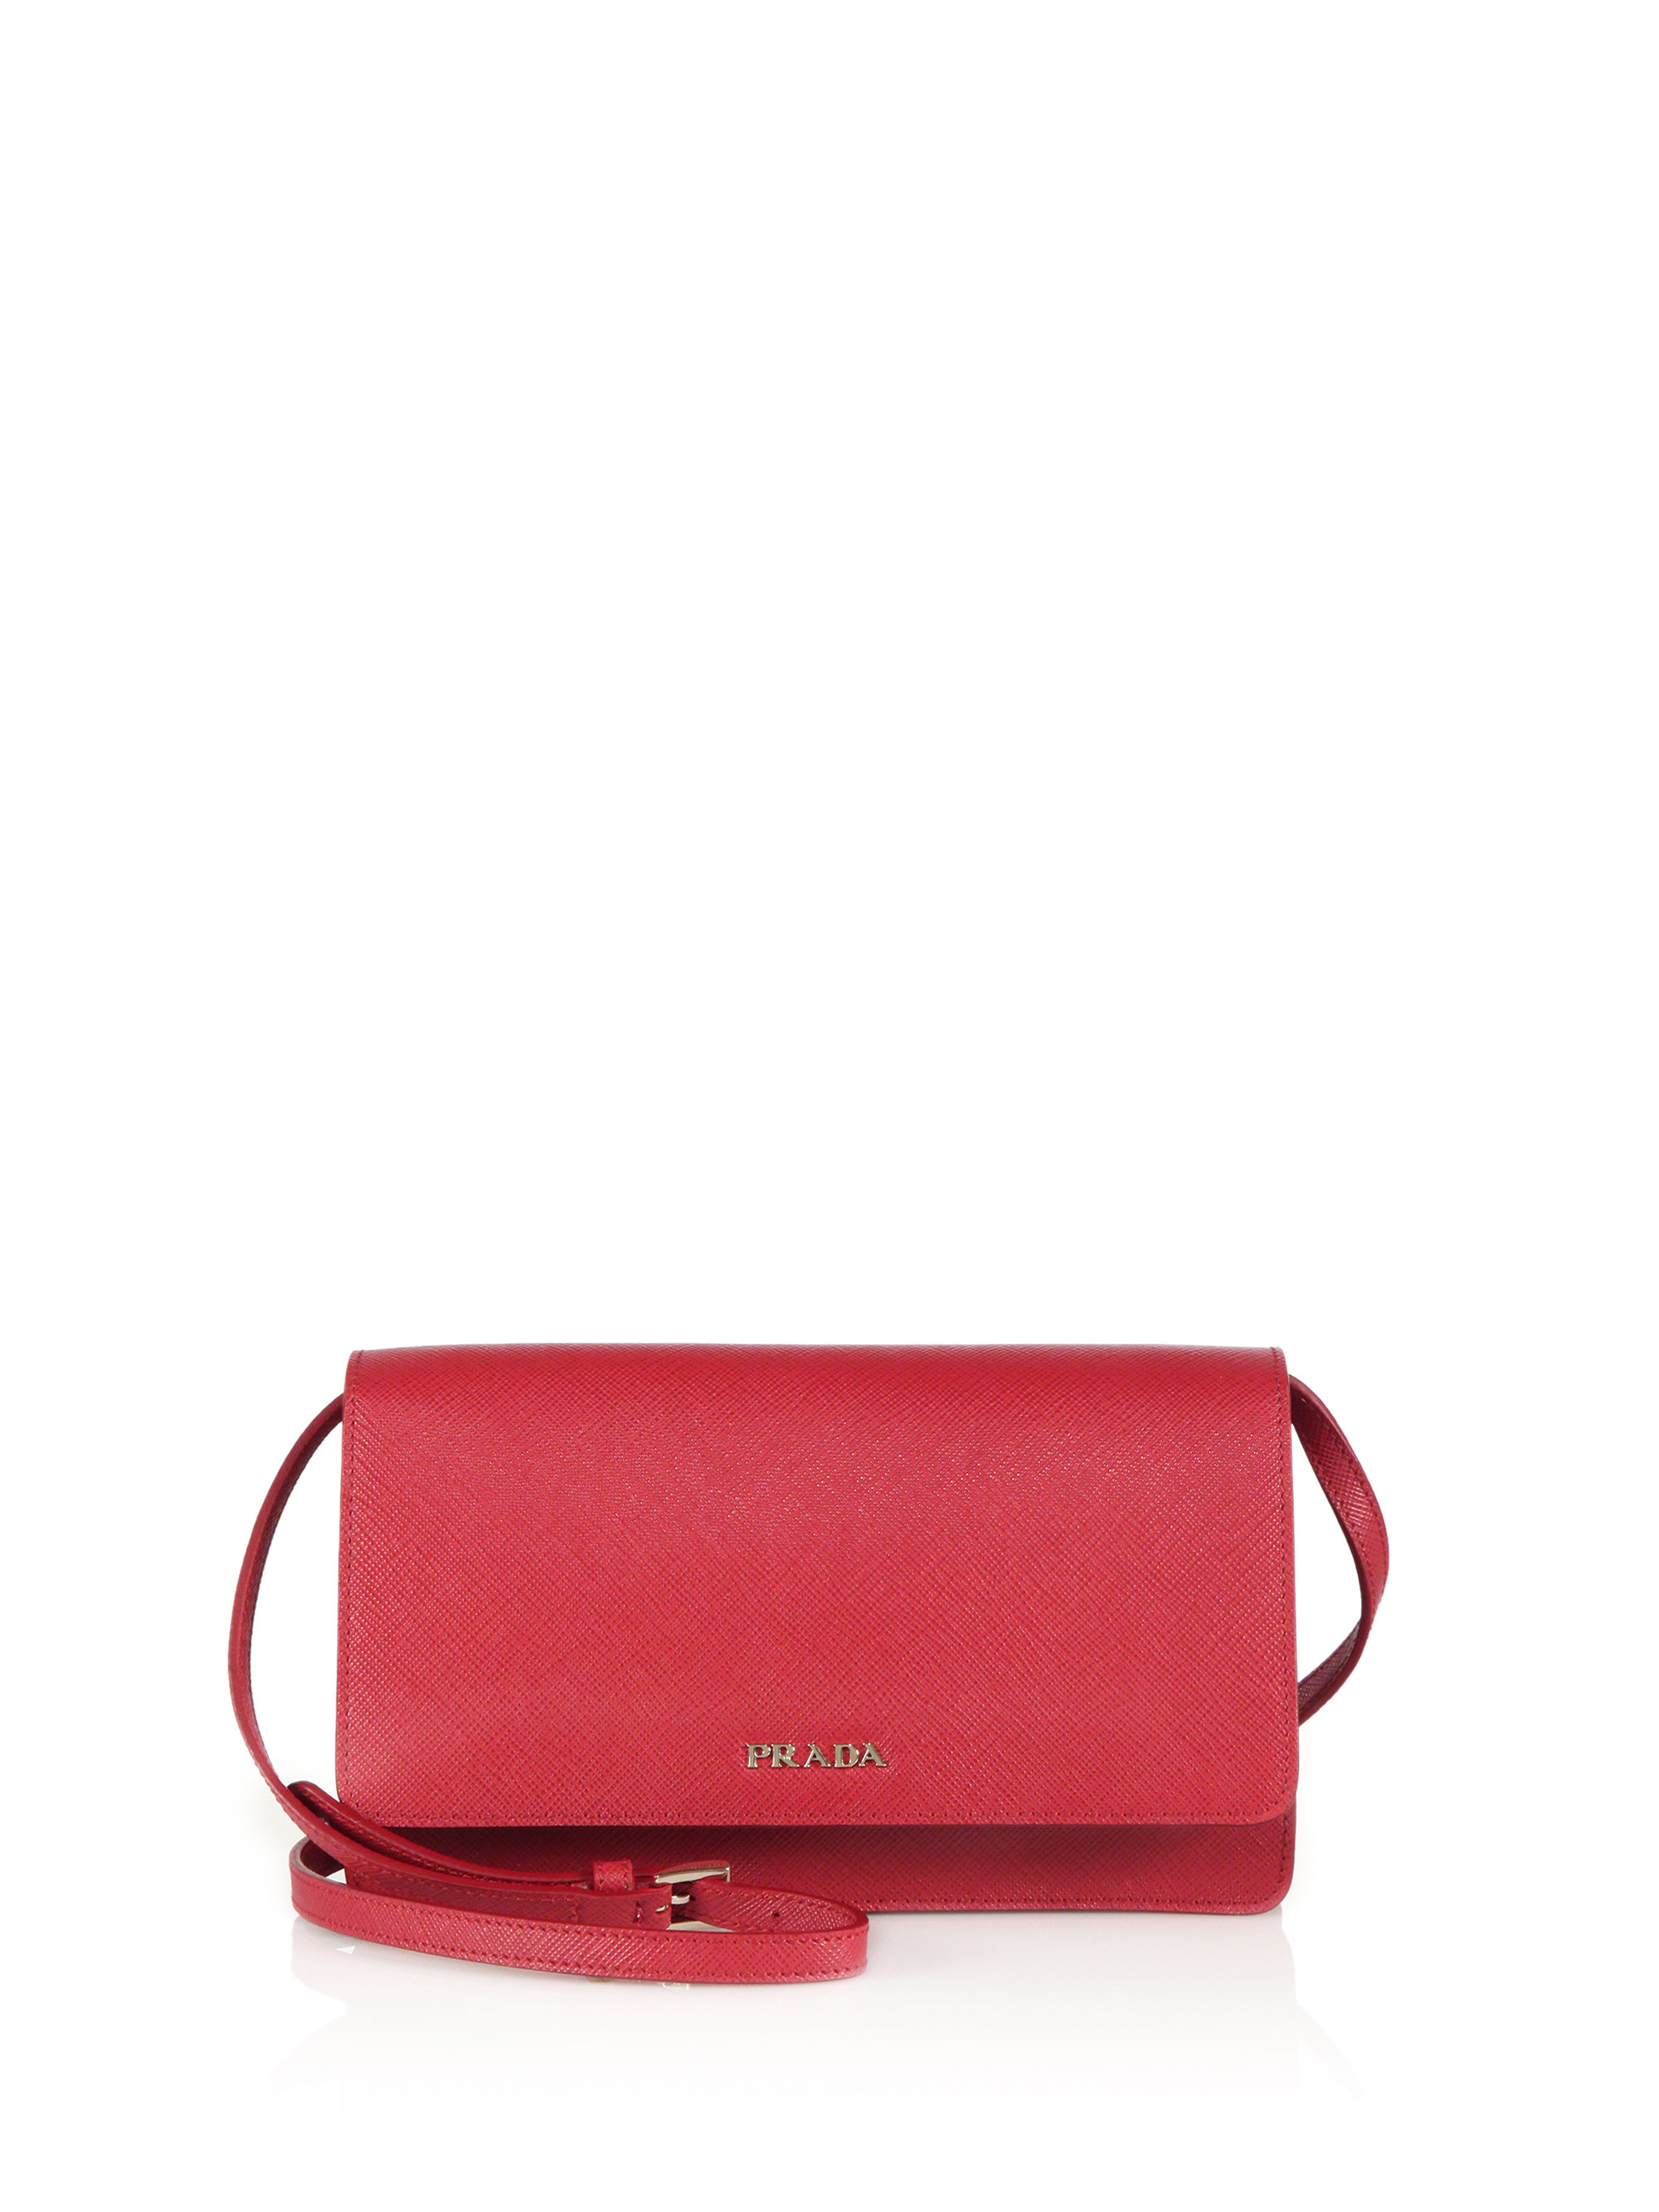 Prada Saffiano Lux Small Crossbody Bag in Red | Lyst